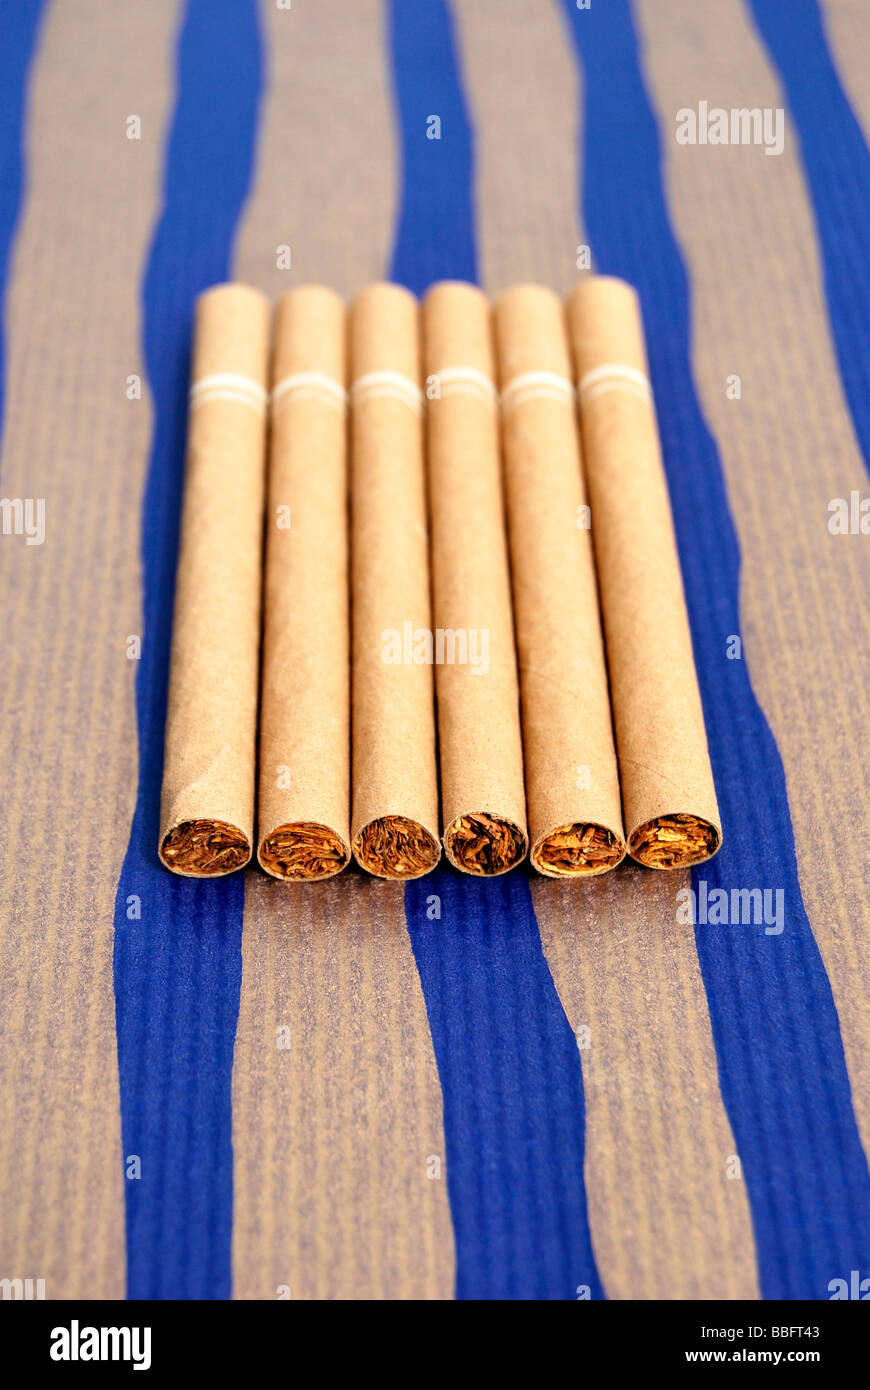 6 cigarillos Stock Photo